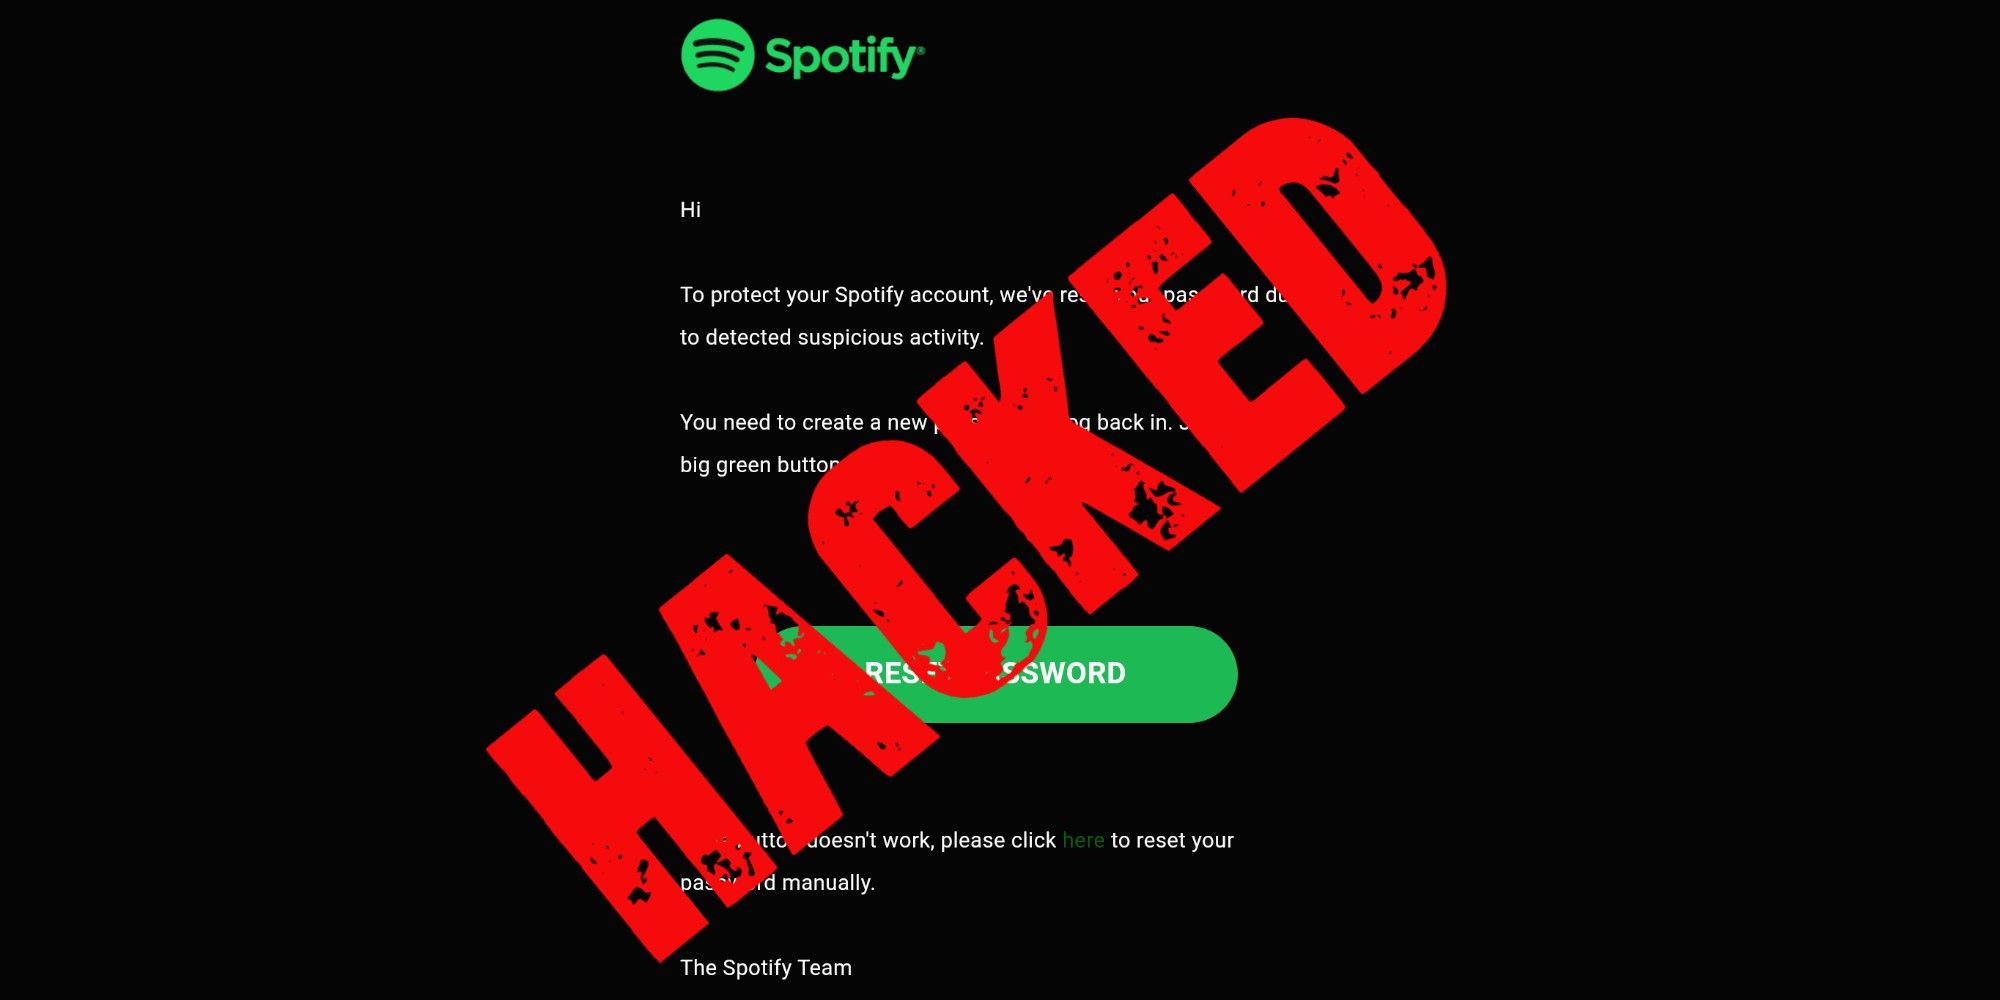 spotify hacked apk reddit